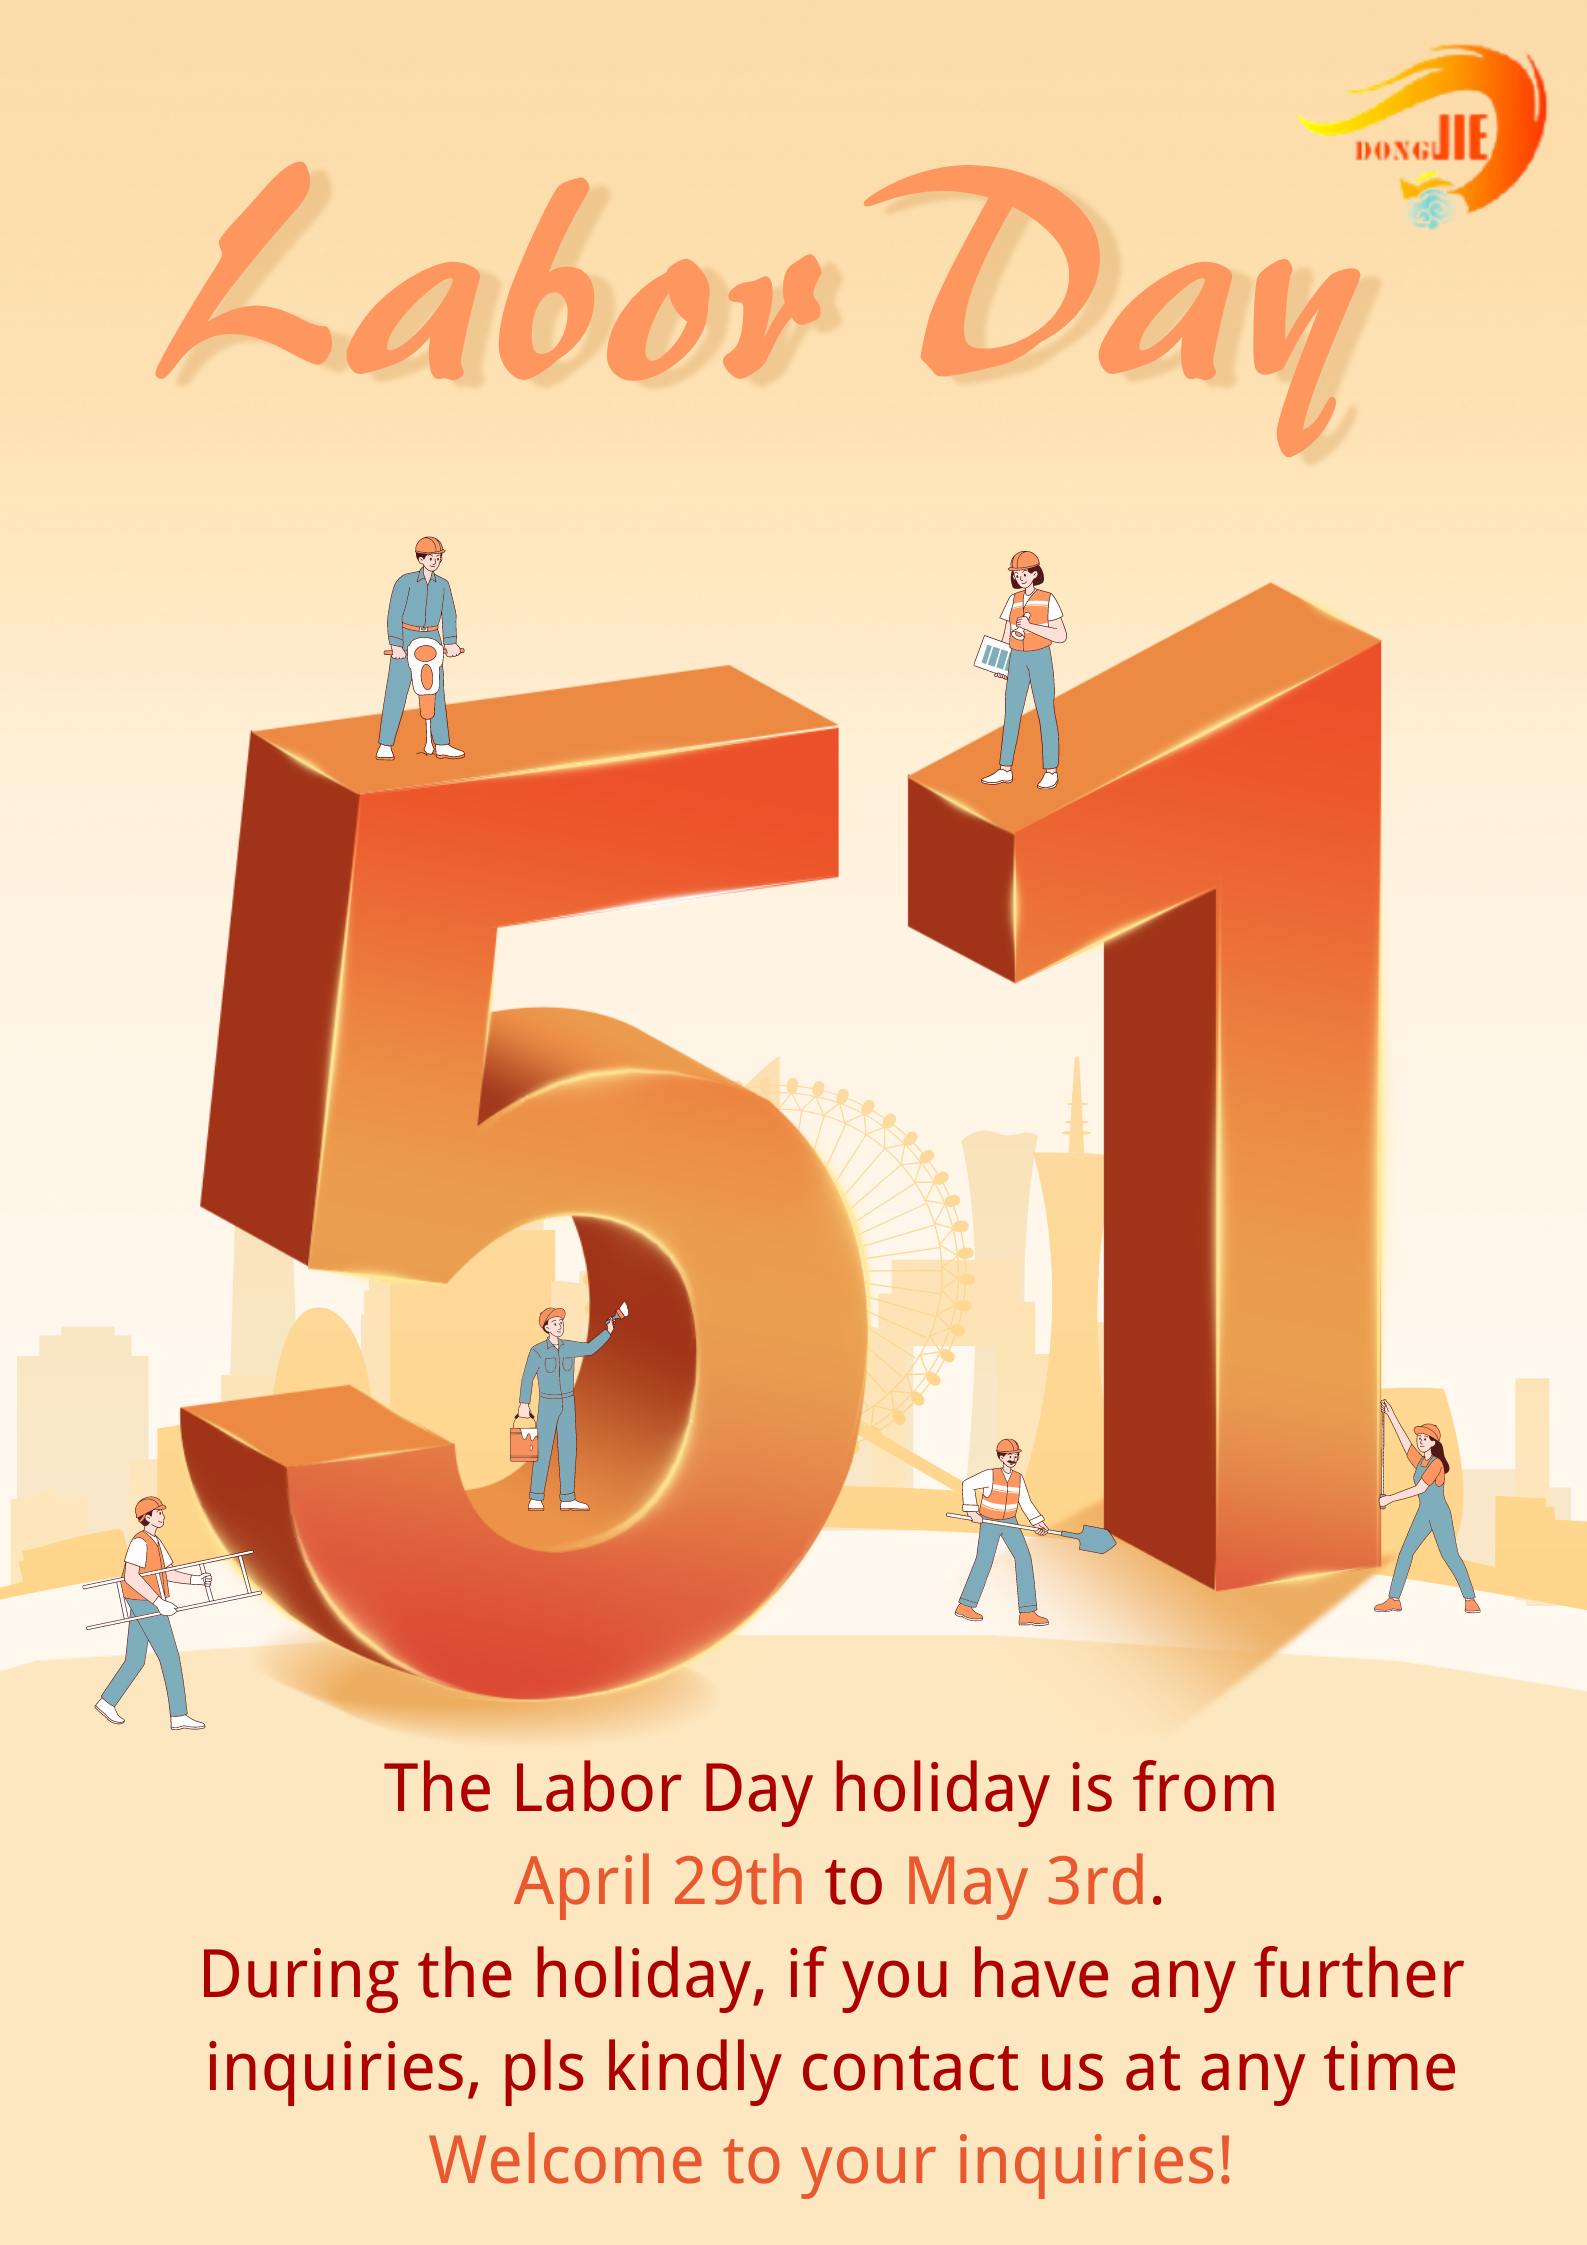 23International Labor Day